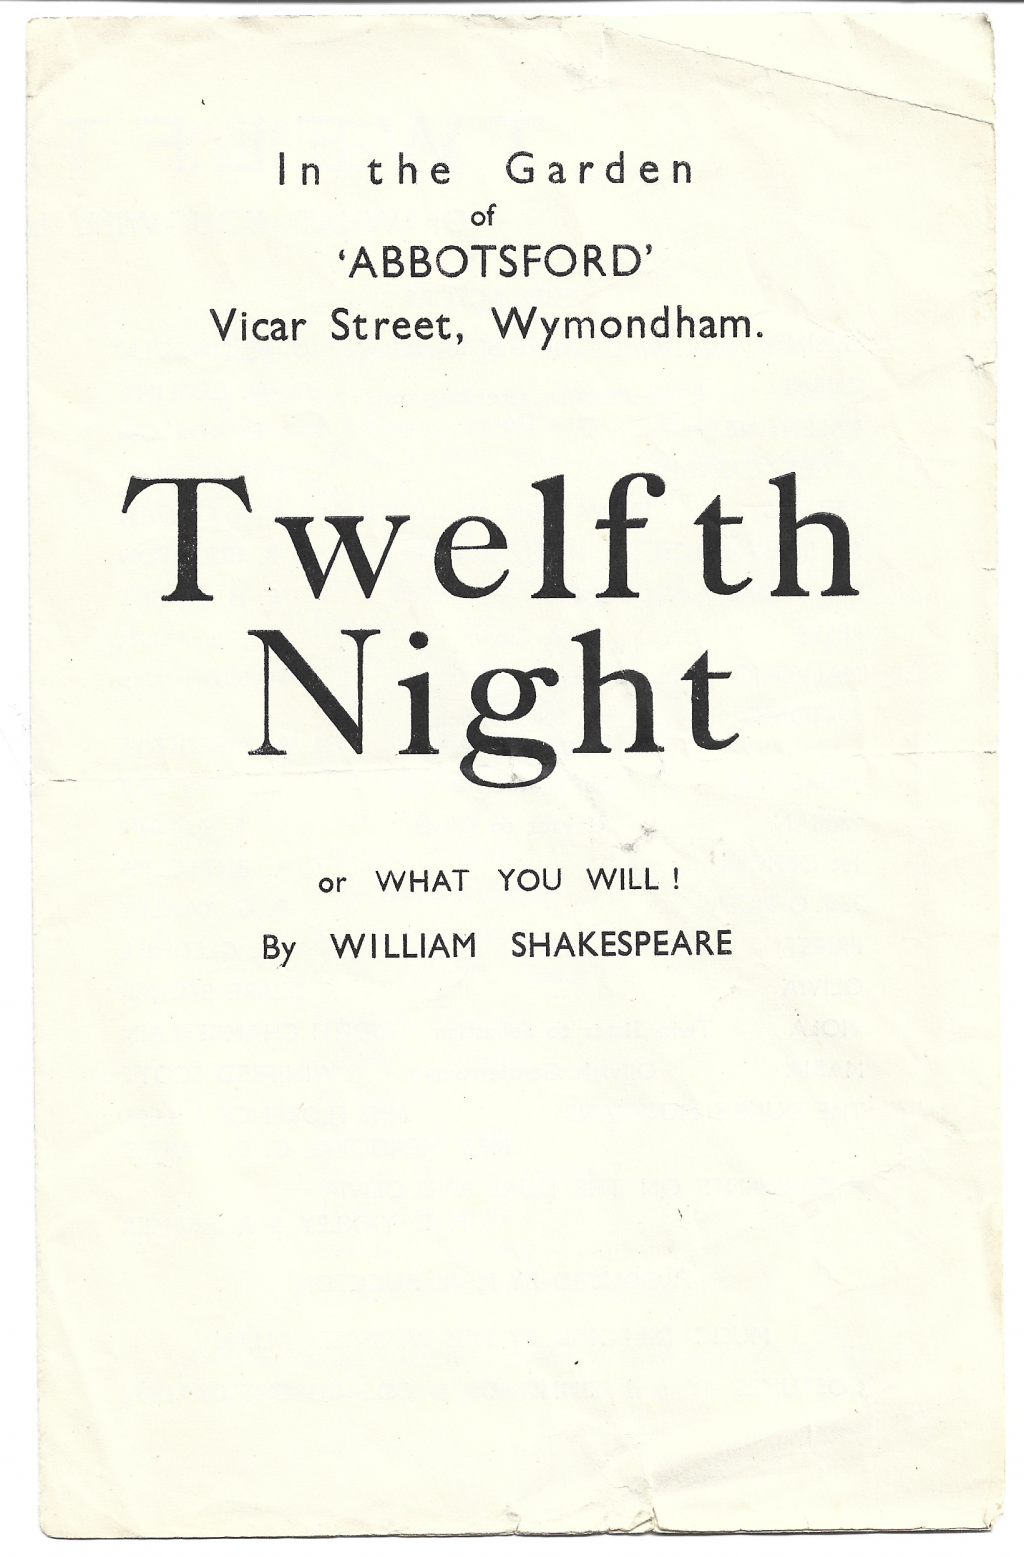 Programme marked Twelfth Night